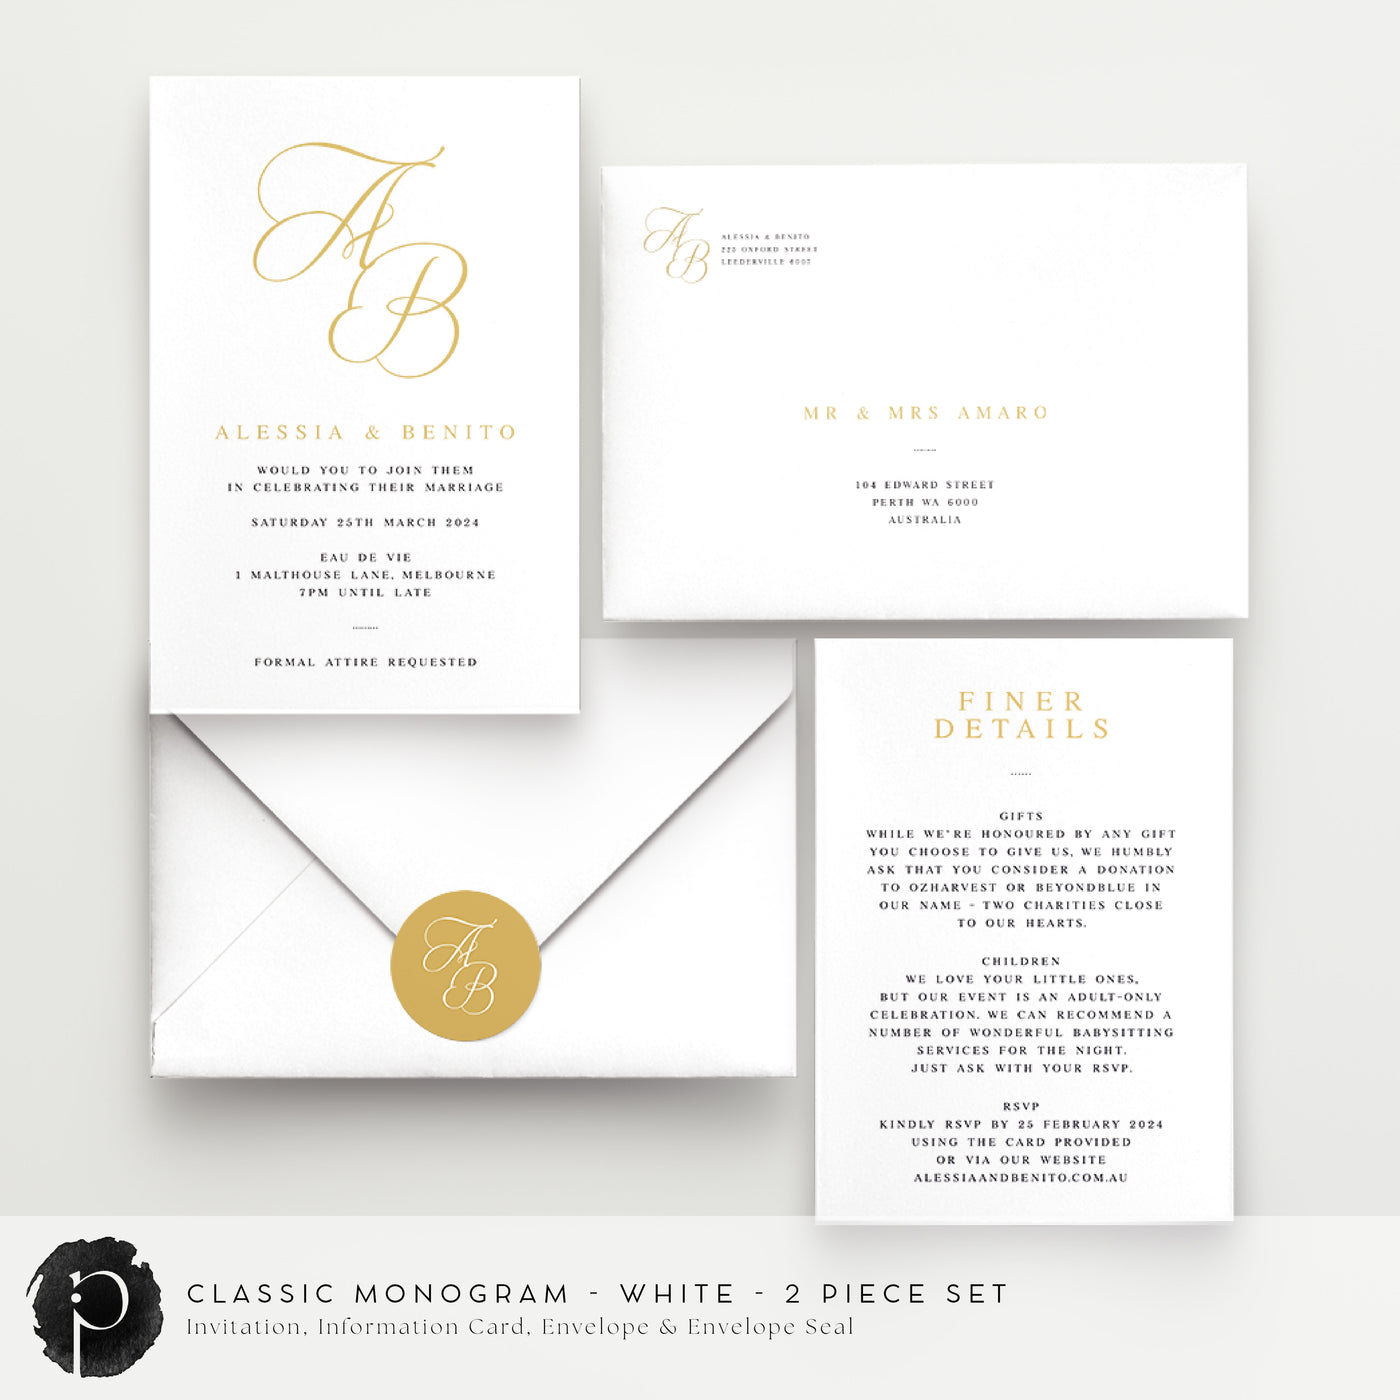 Classic Monogram - Wedding Invitation & Information/Details Card Set